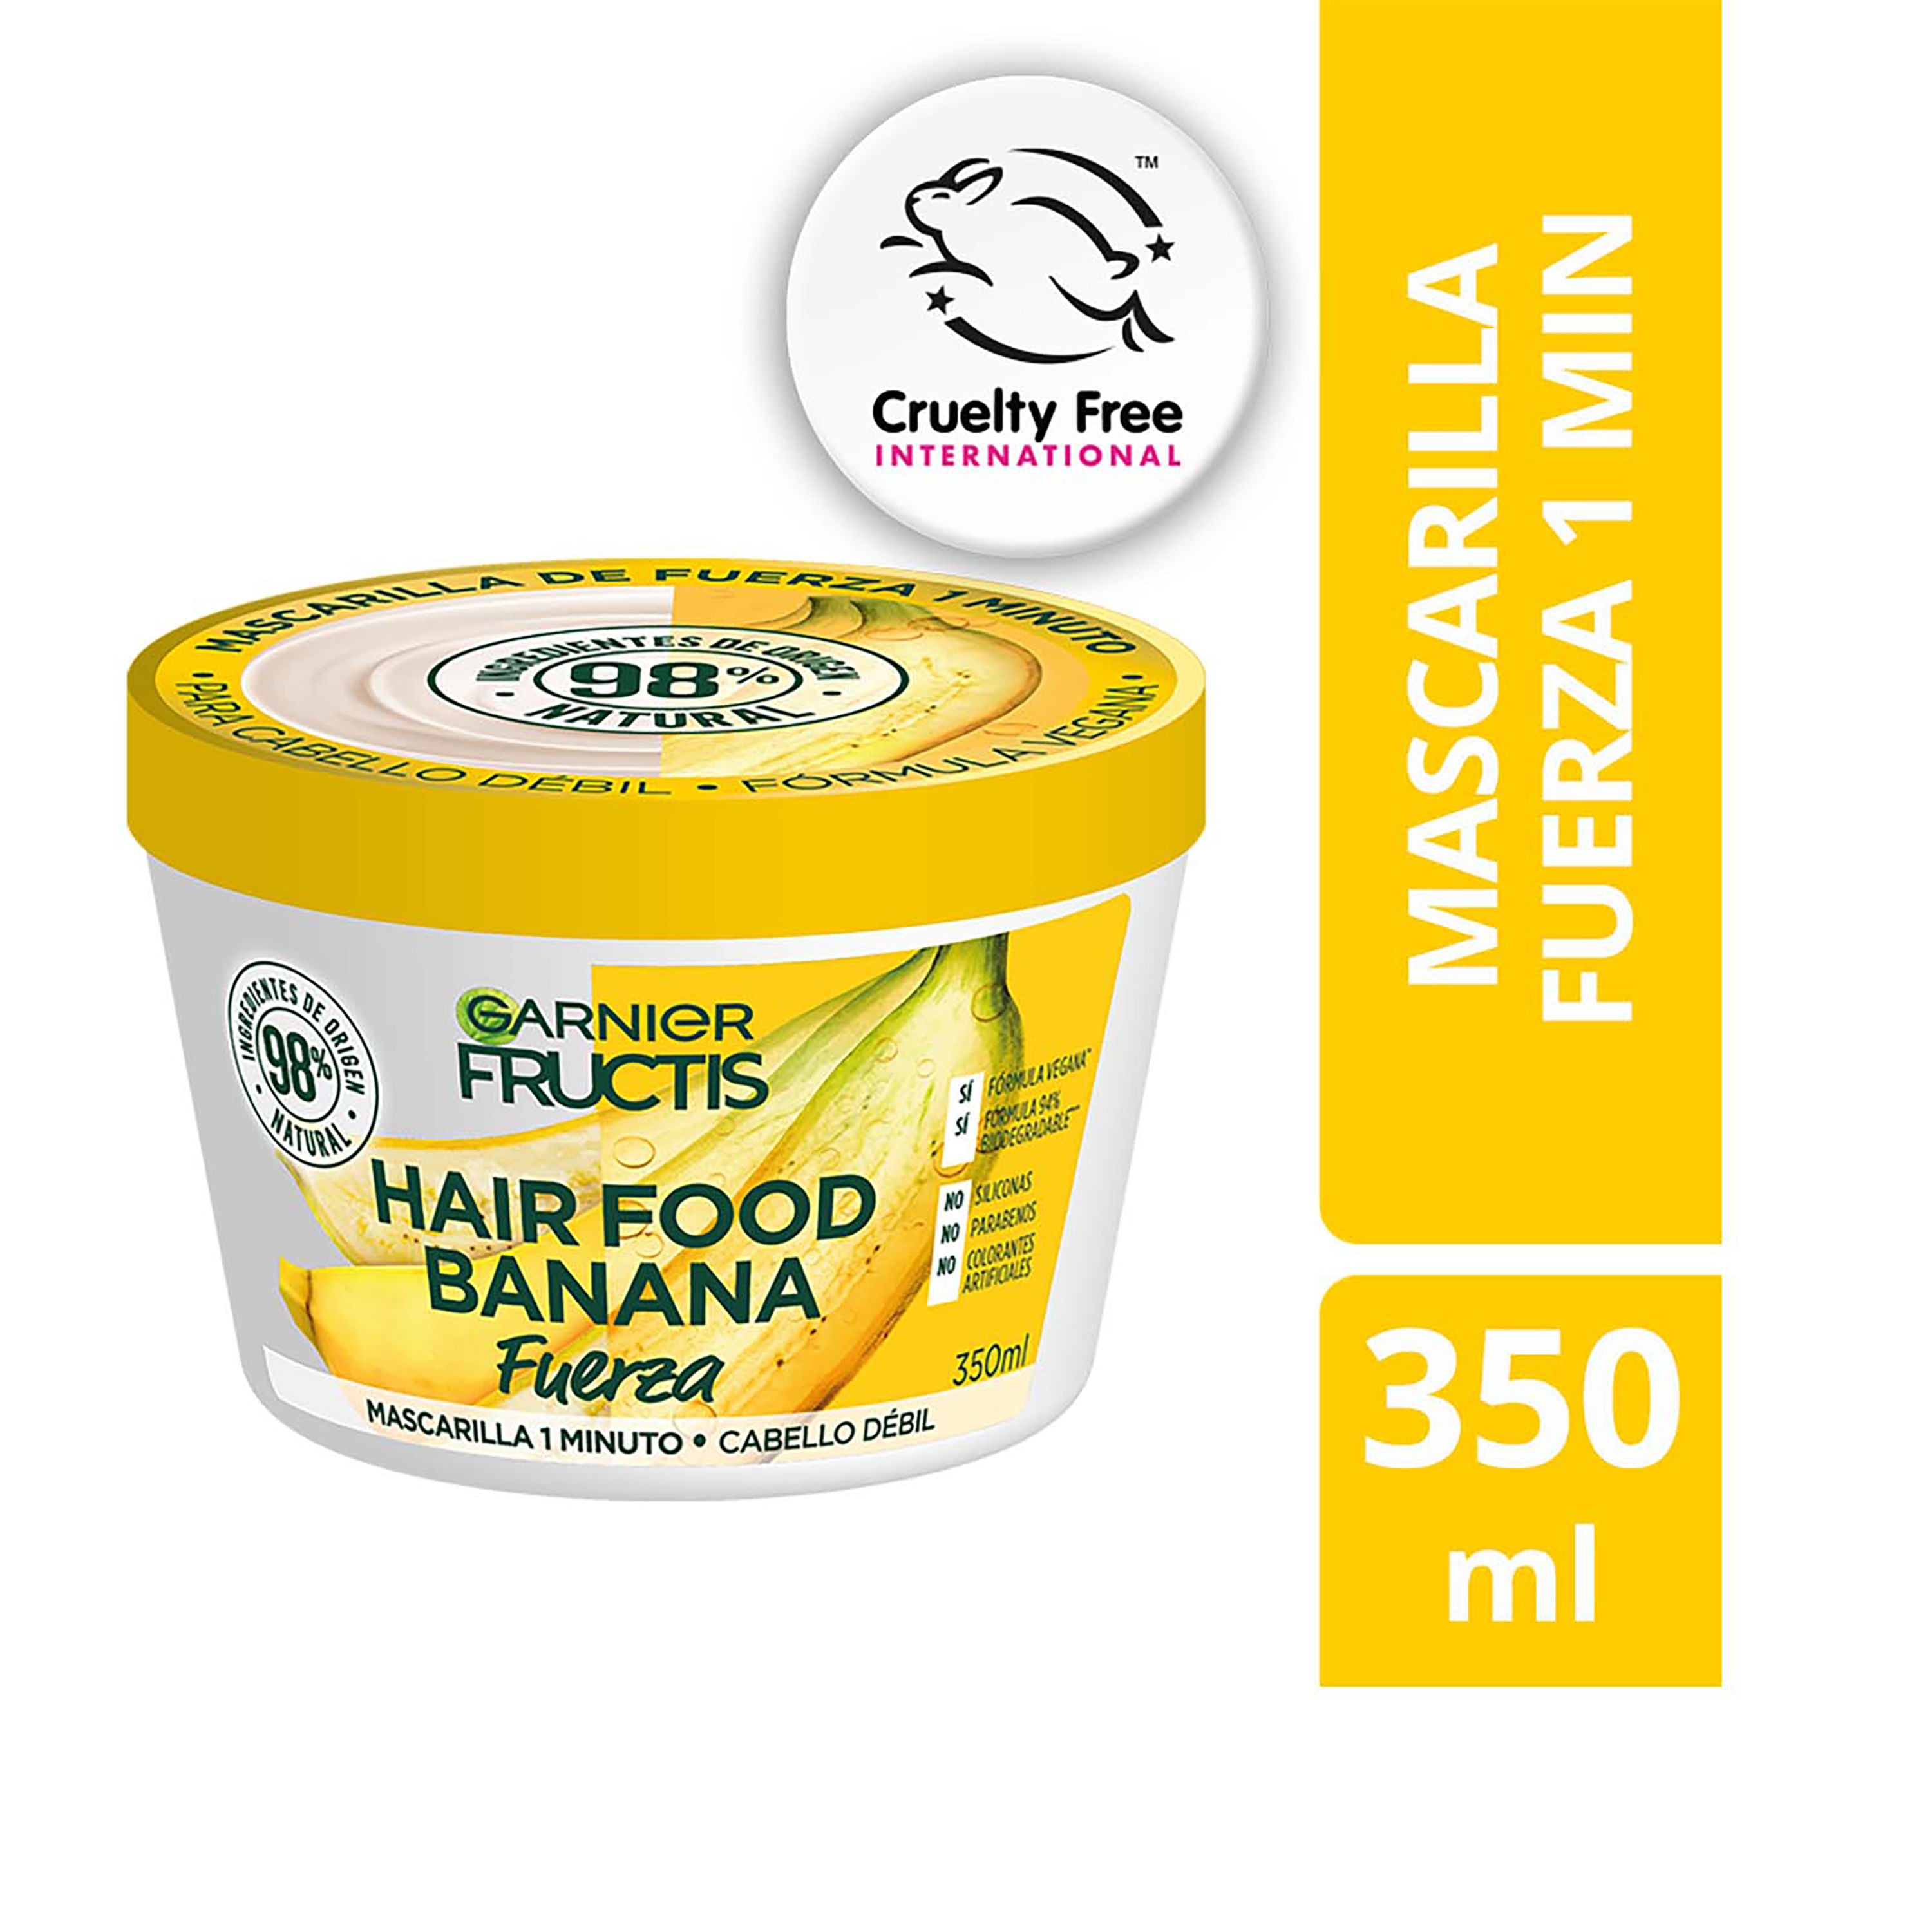 Hair-Food-Mascarilla-Reparaci-n-Garnier-Fructis-Banana-350ml-1-27547